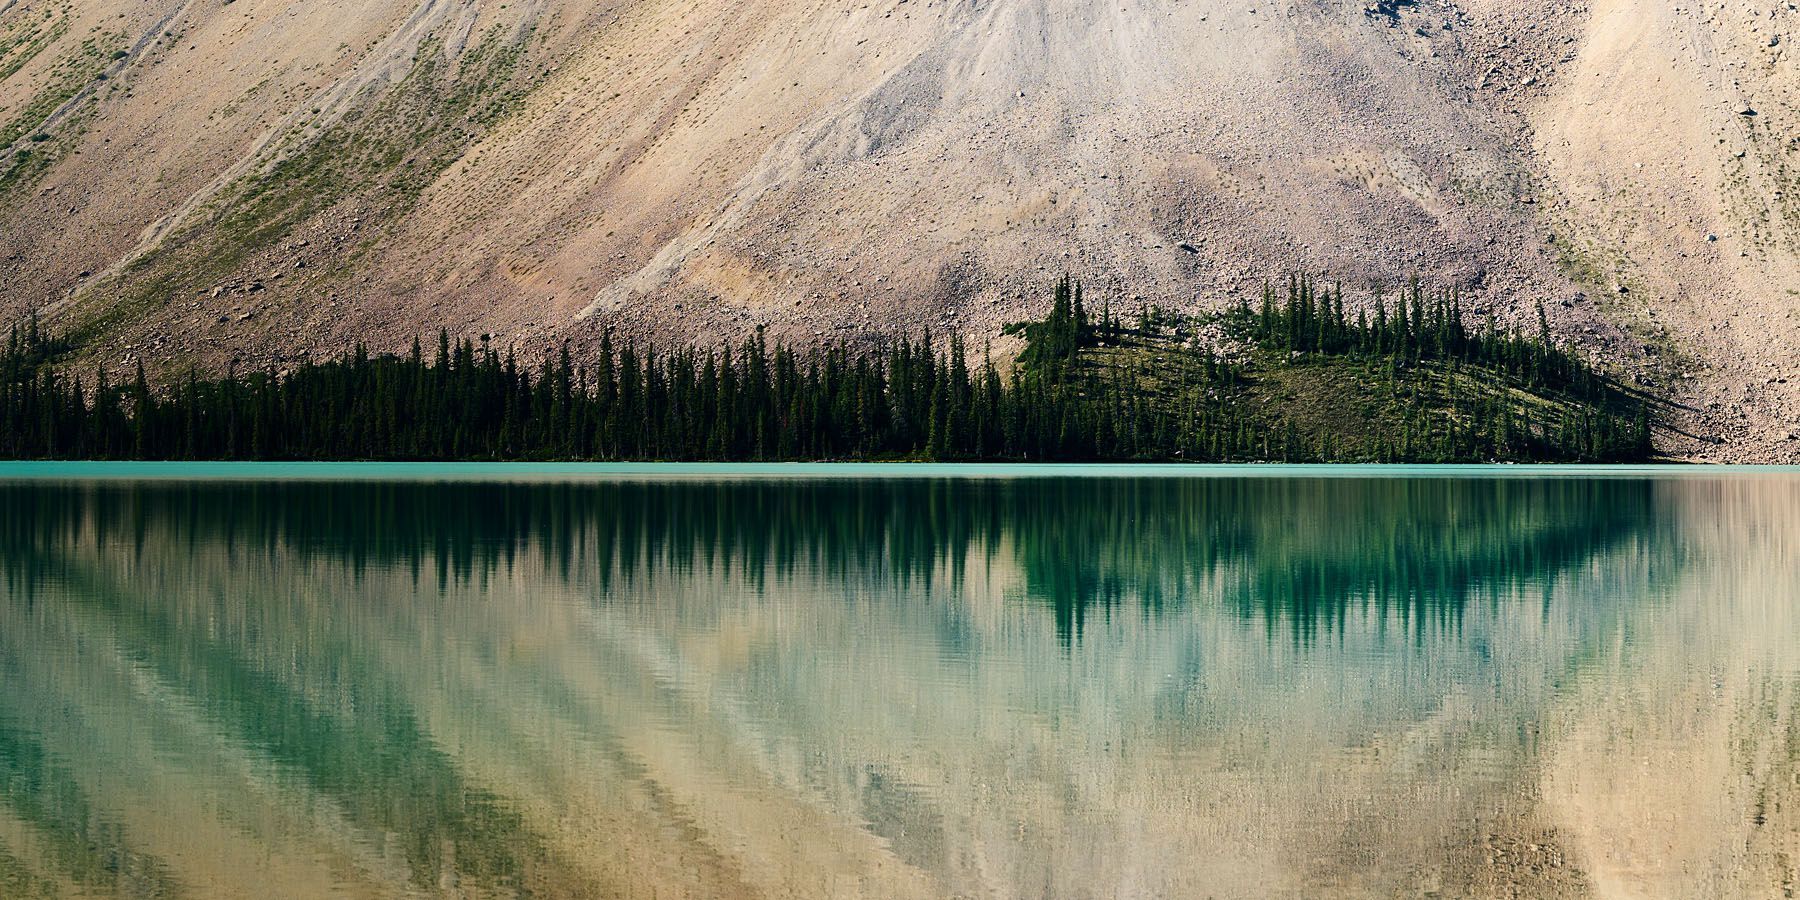 Beautiful reflection in calm waters at Bow Lake, Alberta, Canada.